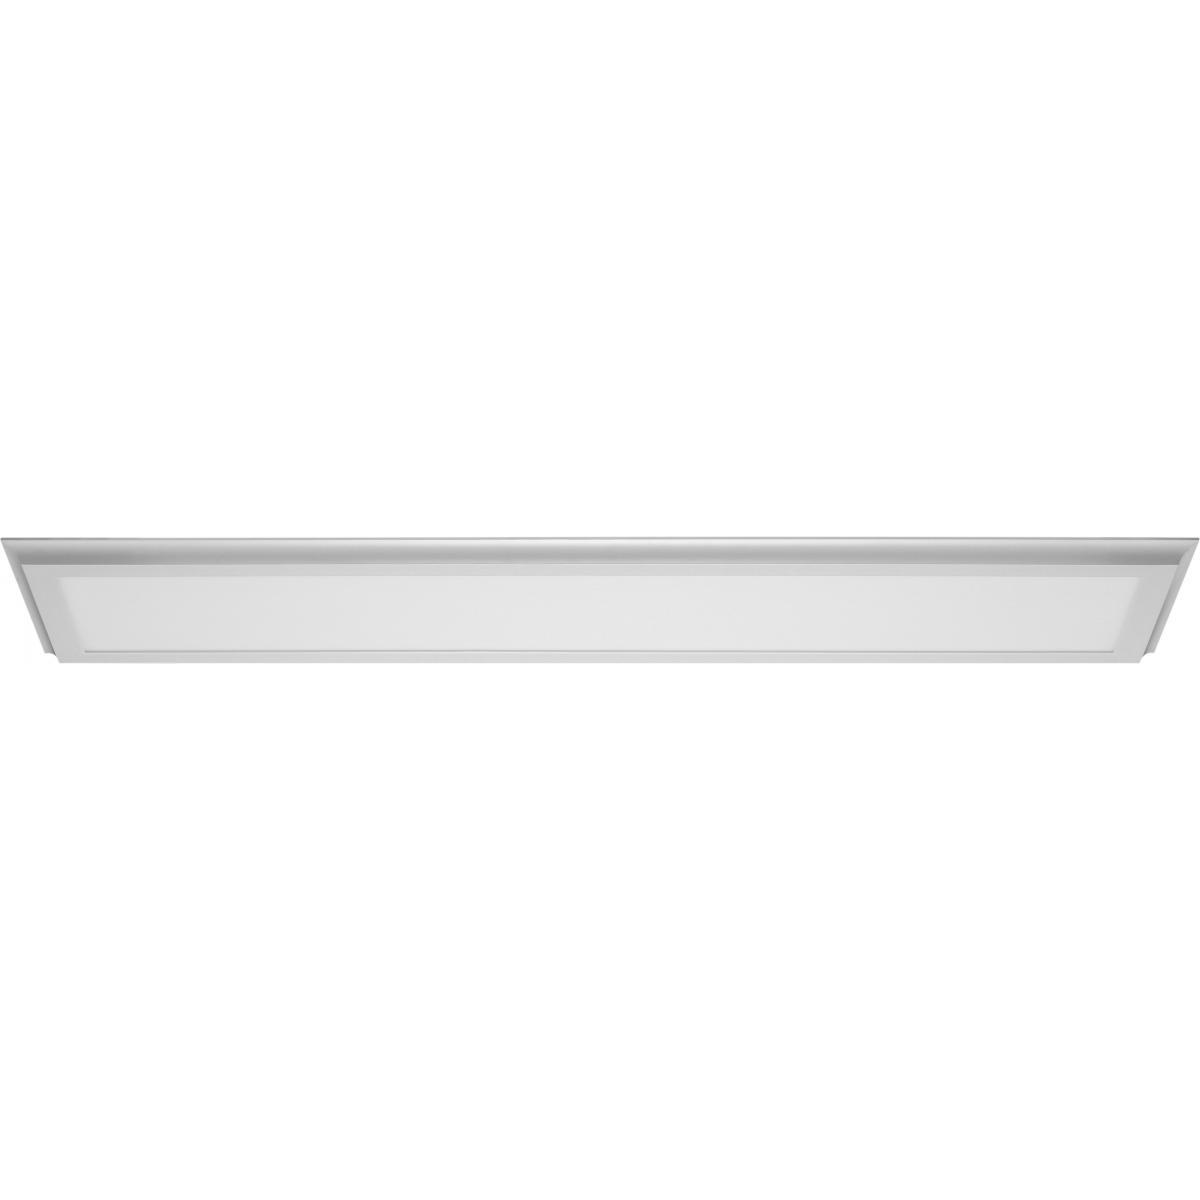 12" X 49" Surface LED Fixture - White 100-277V Ceiling Nuvo Lighting 3000K 